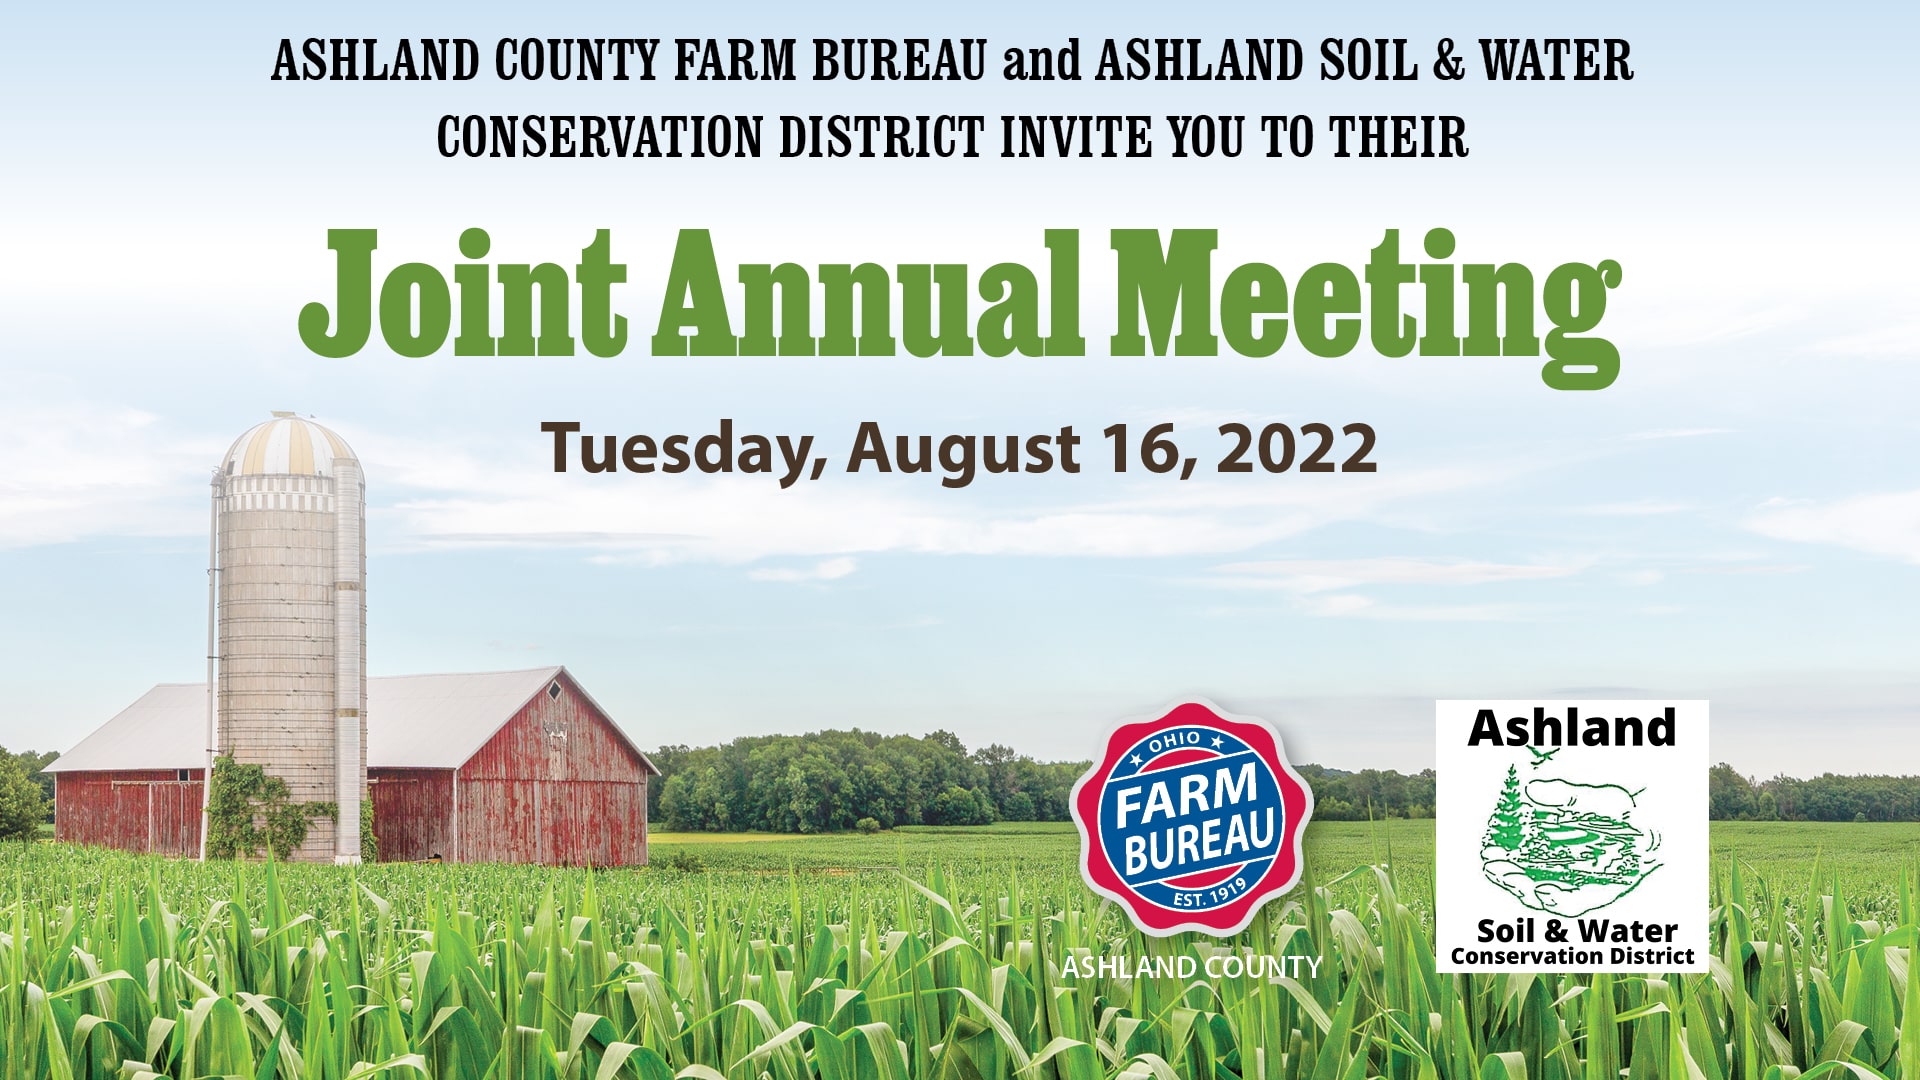 Ohio Farm Bureau Event Calendar